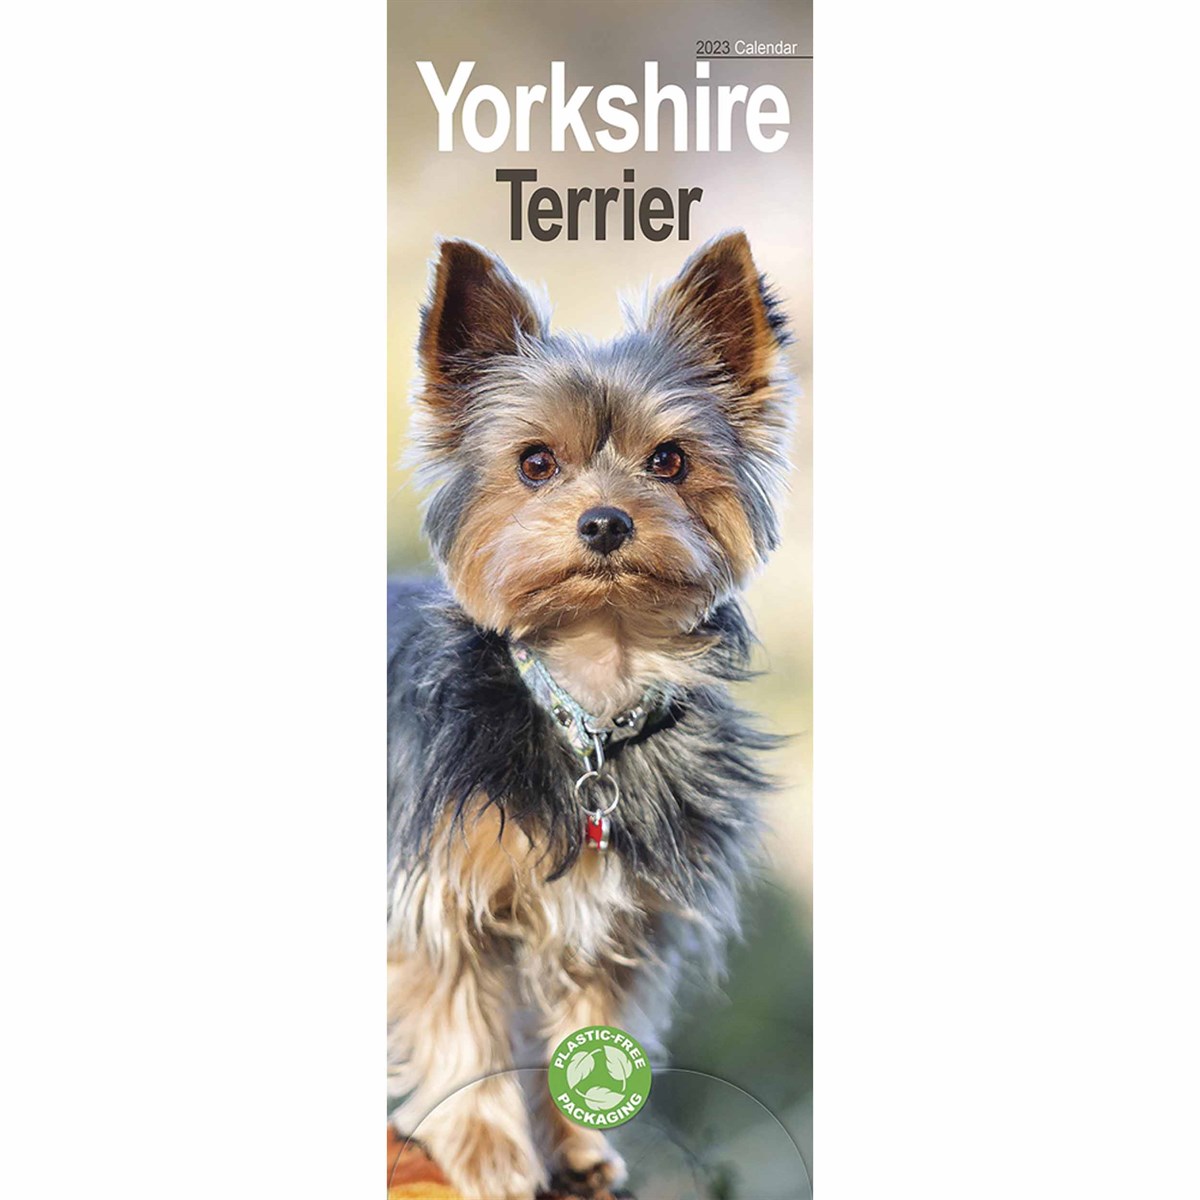 Yorkshire Terrier Slim 2023 Calendars